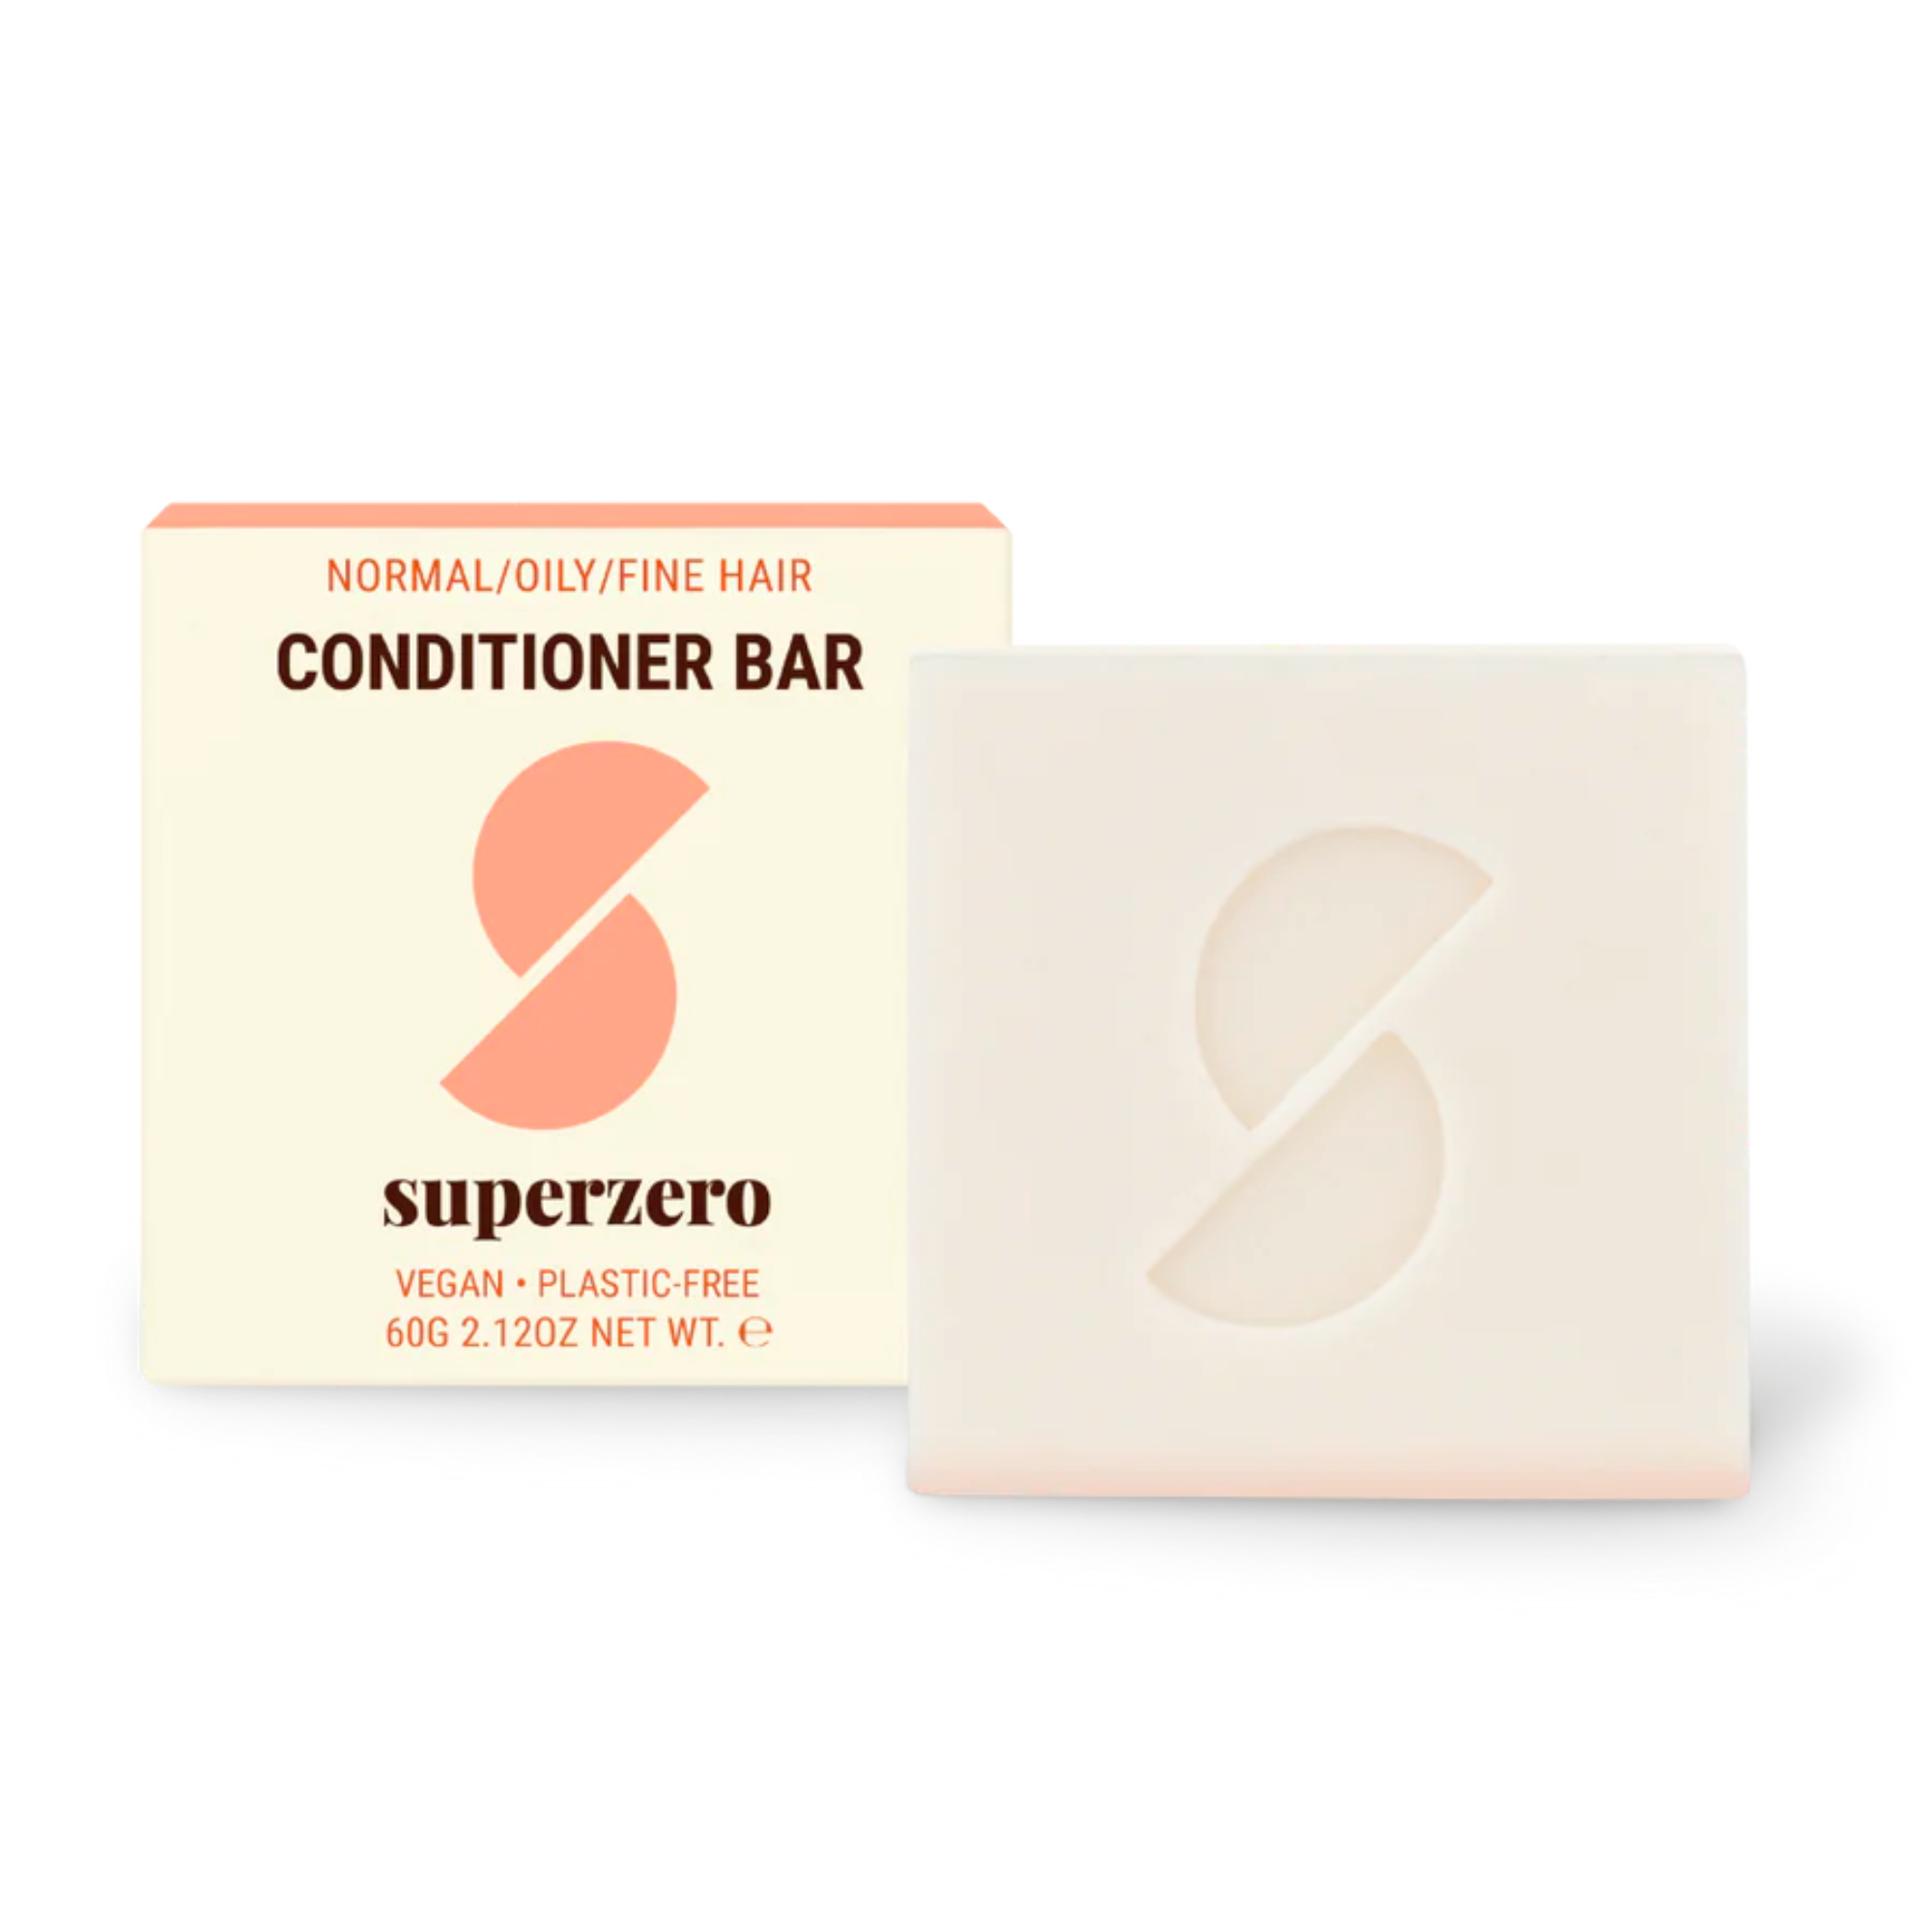 Superzero Avocado + Hemisqualane Conditioner Bar for Normal, Oily, Fine Hair at Socialite Beauty Canada